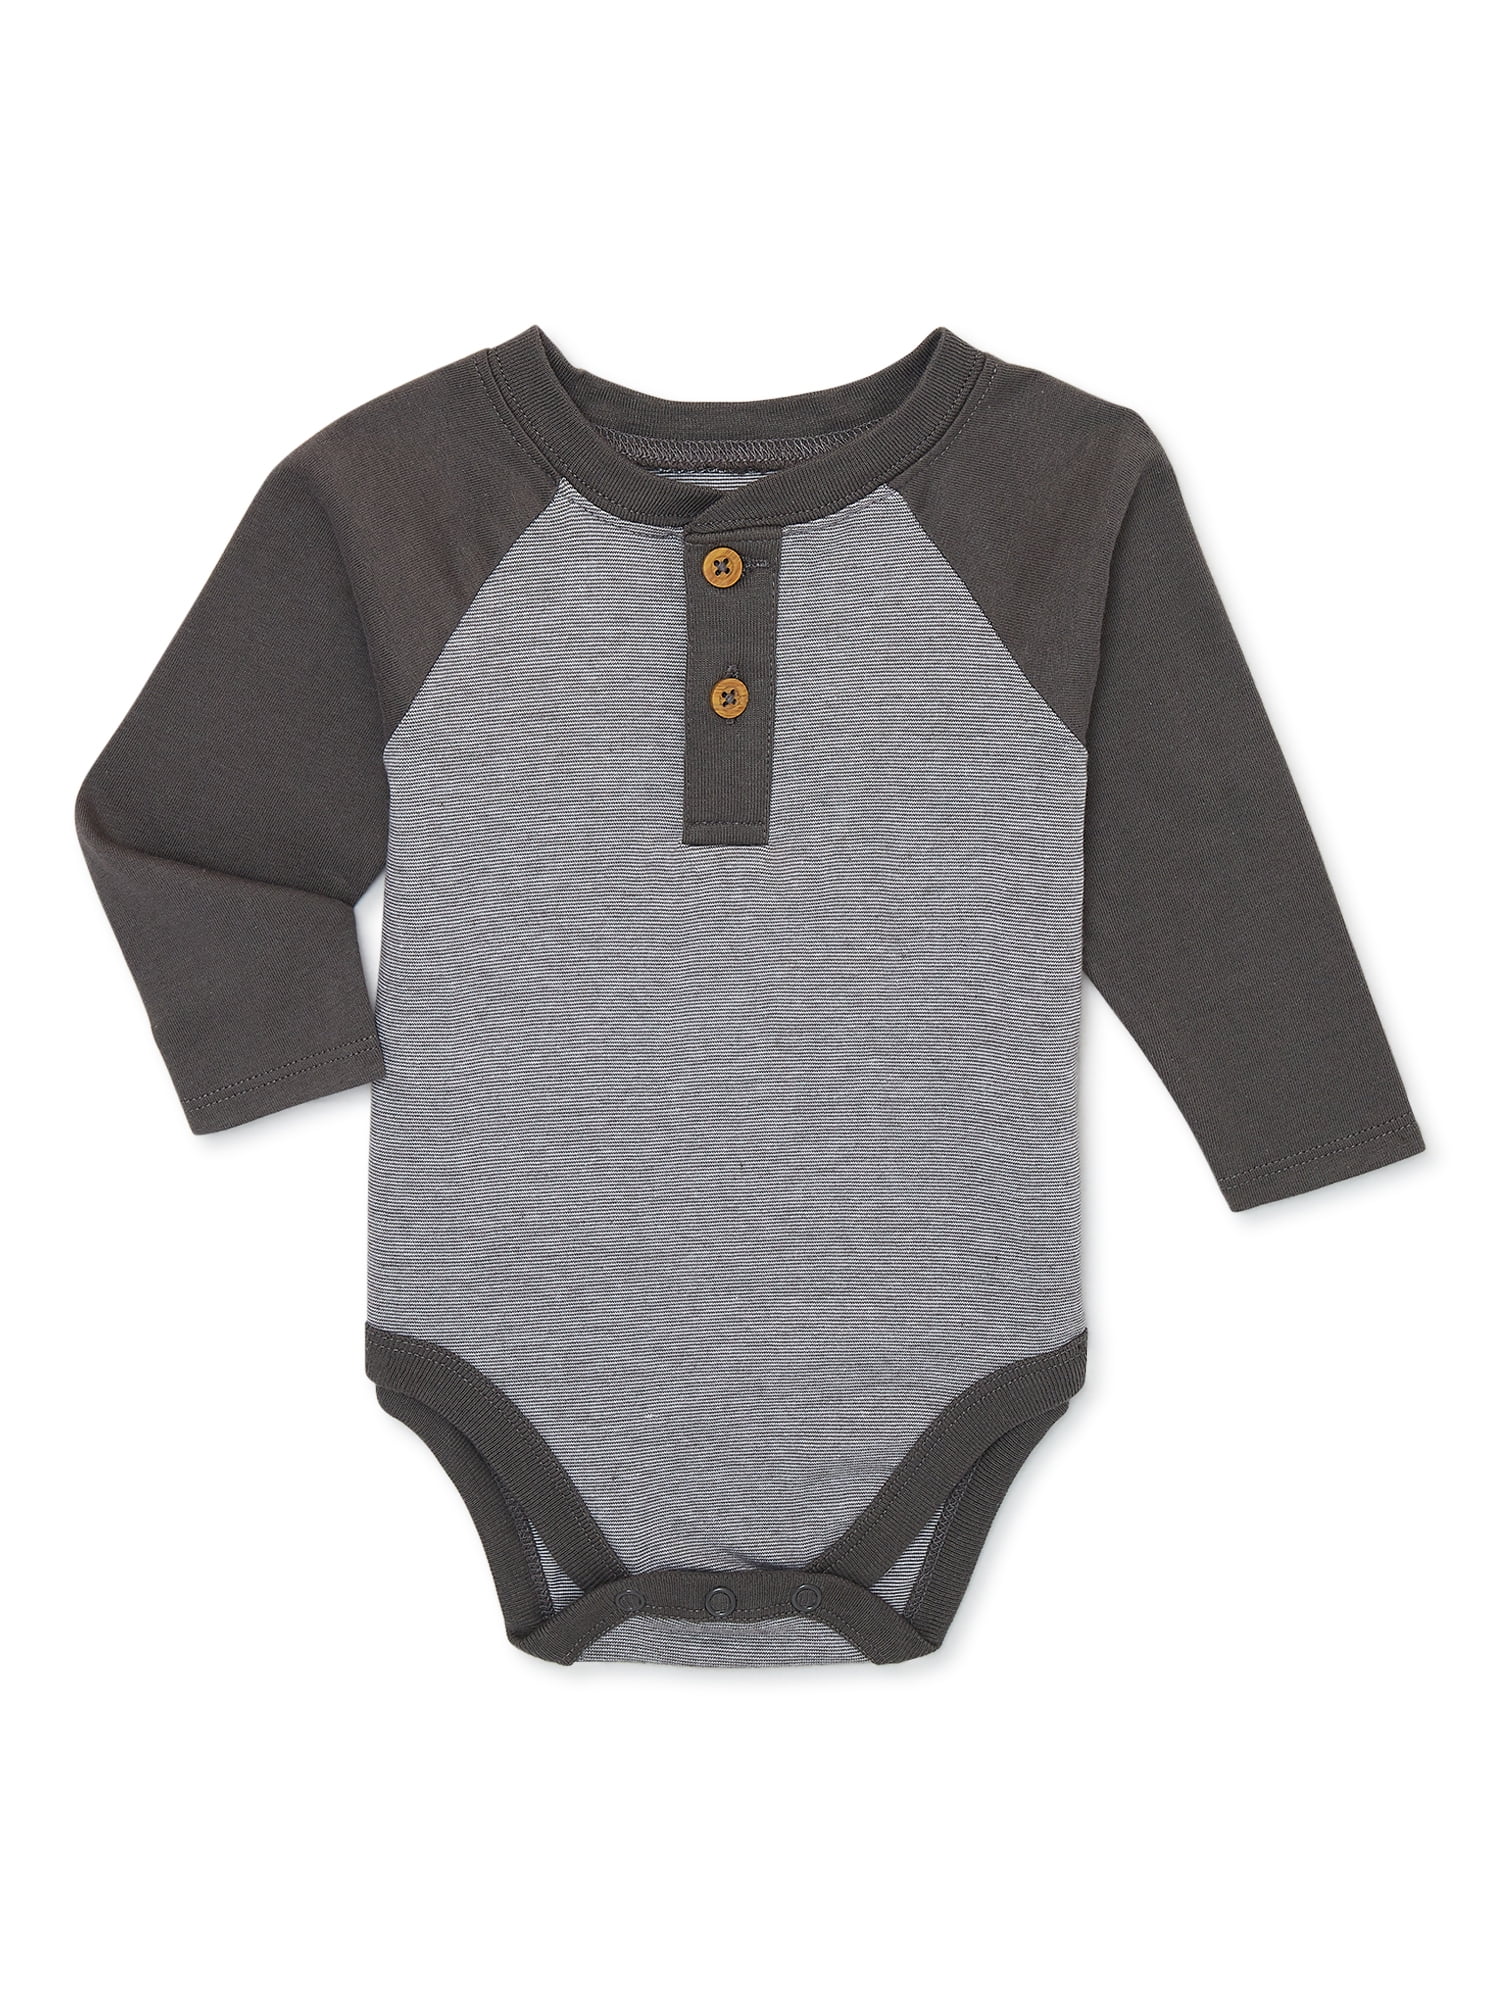 Garanimals Baby Boy Long Sleeve Raglan Bodysuit, Sizes 0-24 Months